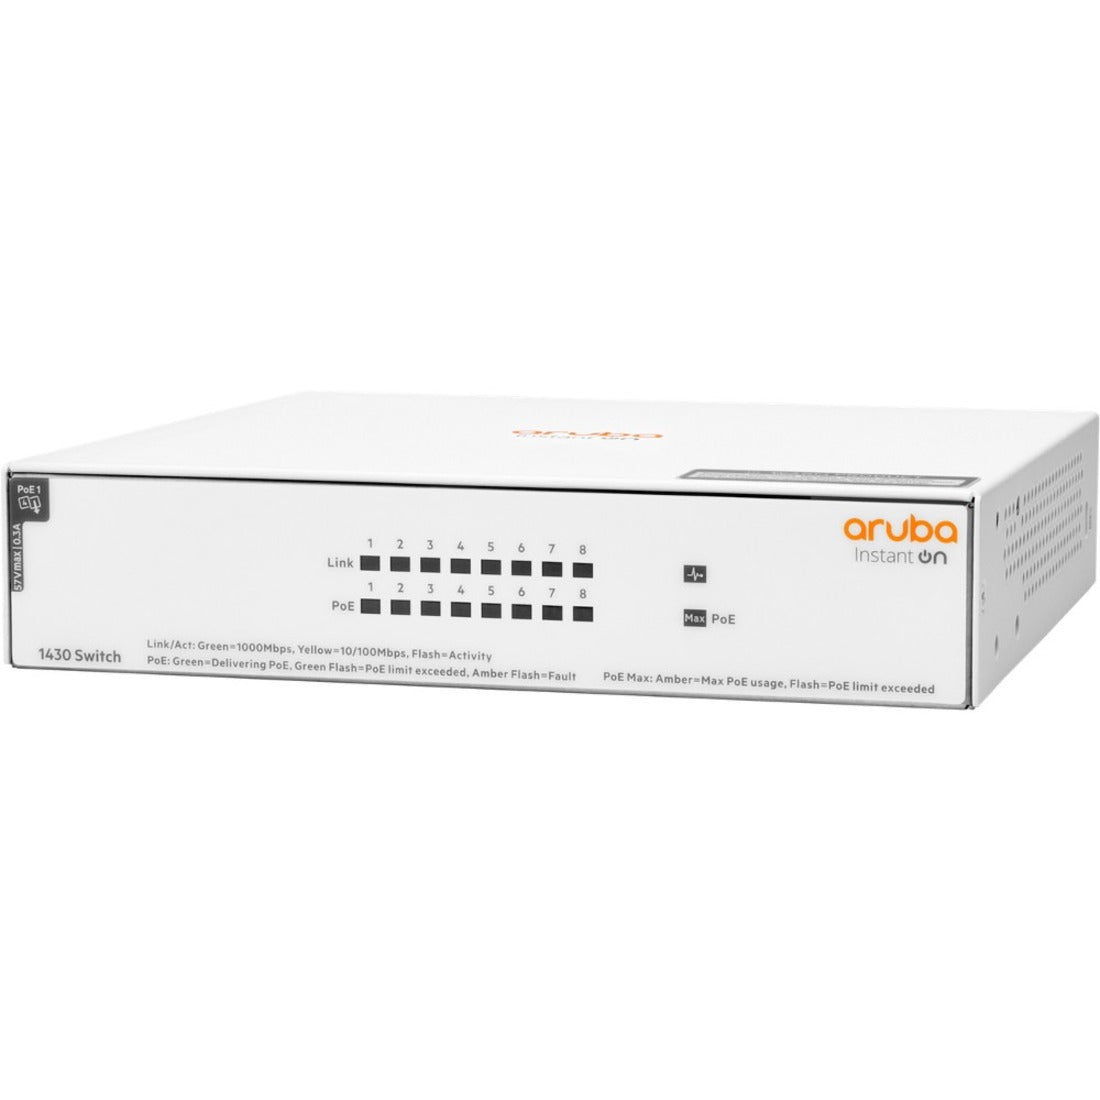 Interruptor PoE Clase4 con 8 puertos Aruba Instant On 1430 8G Ethernet Gigabit 64W. Marca: Aruba Instant On.